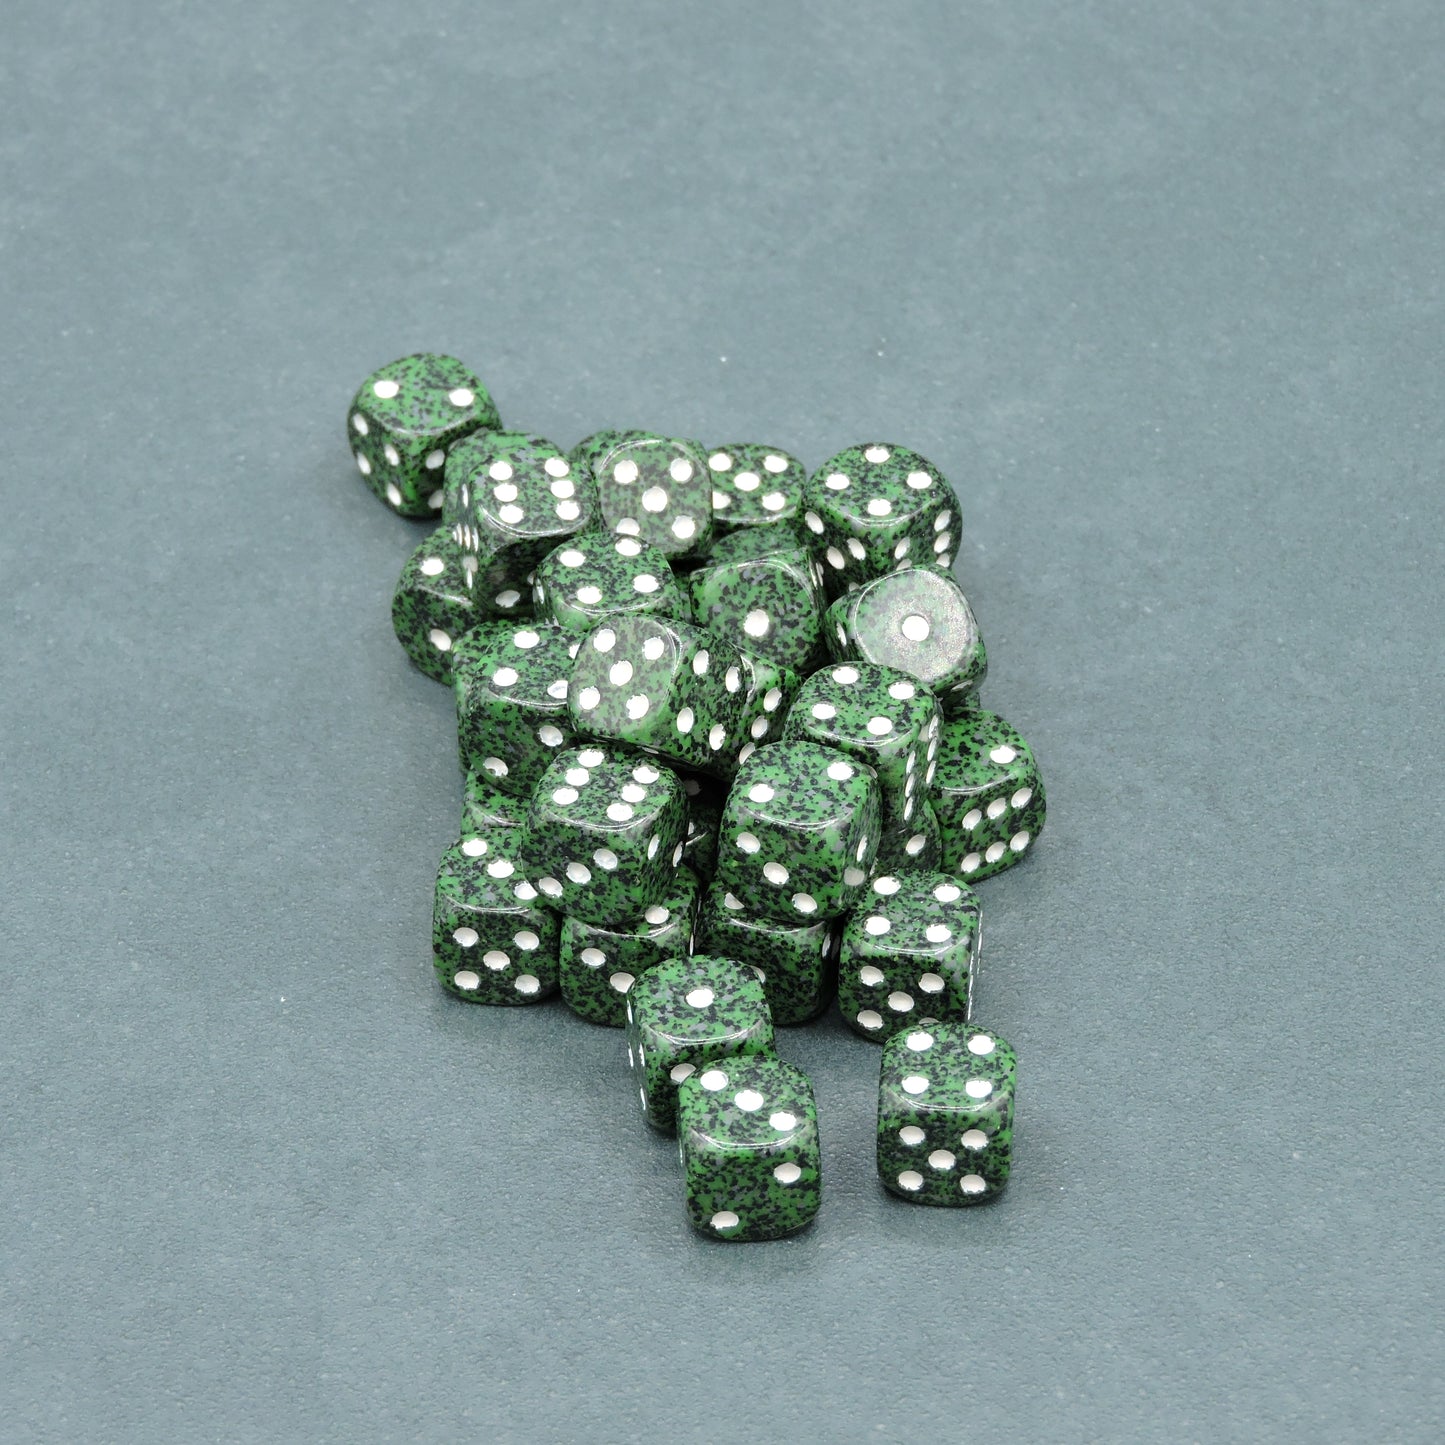 Recon Speckled 12mm d6 Dice Block (36 dice)